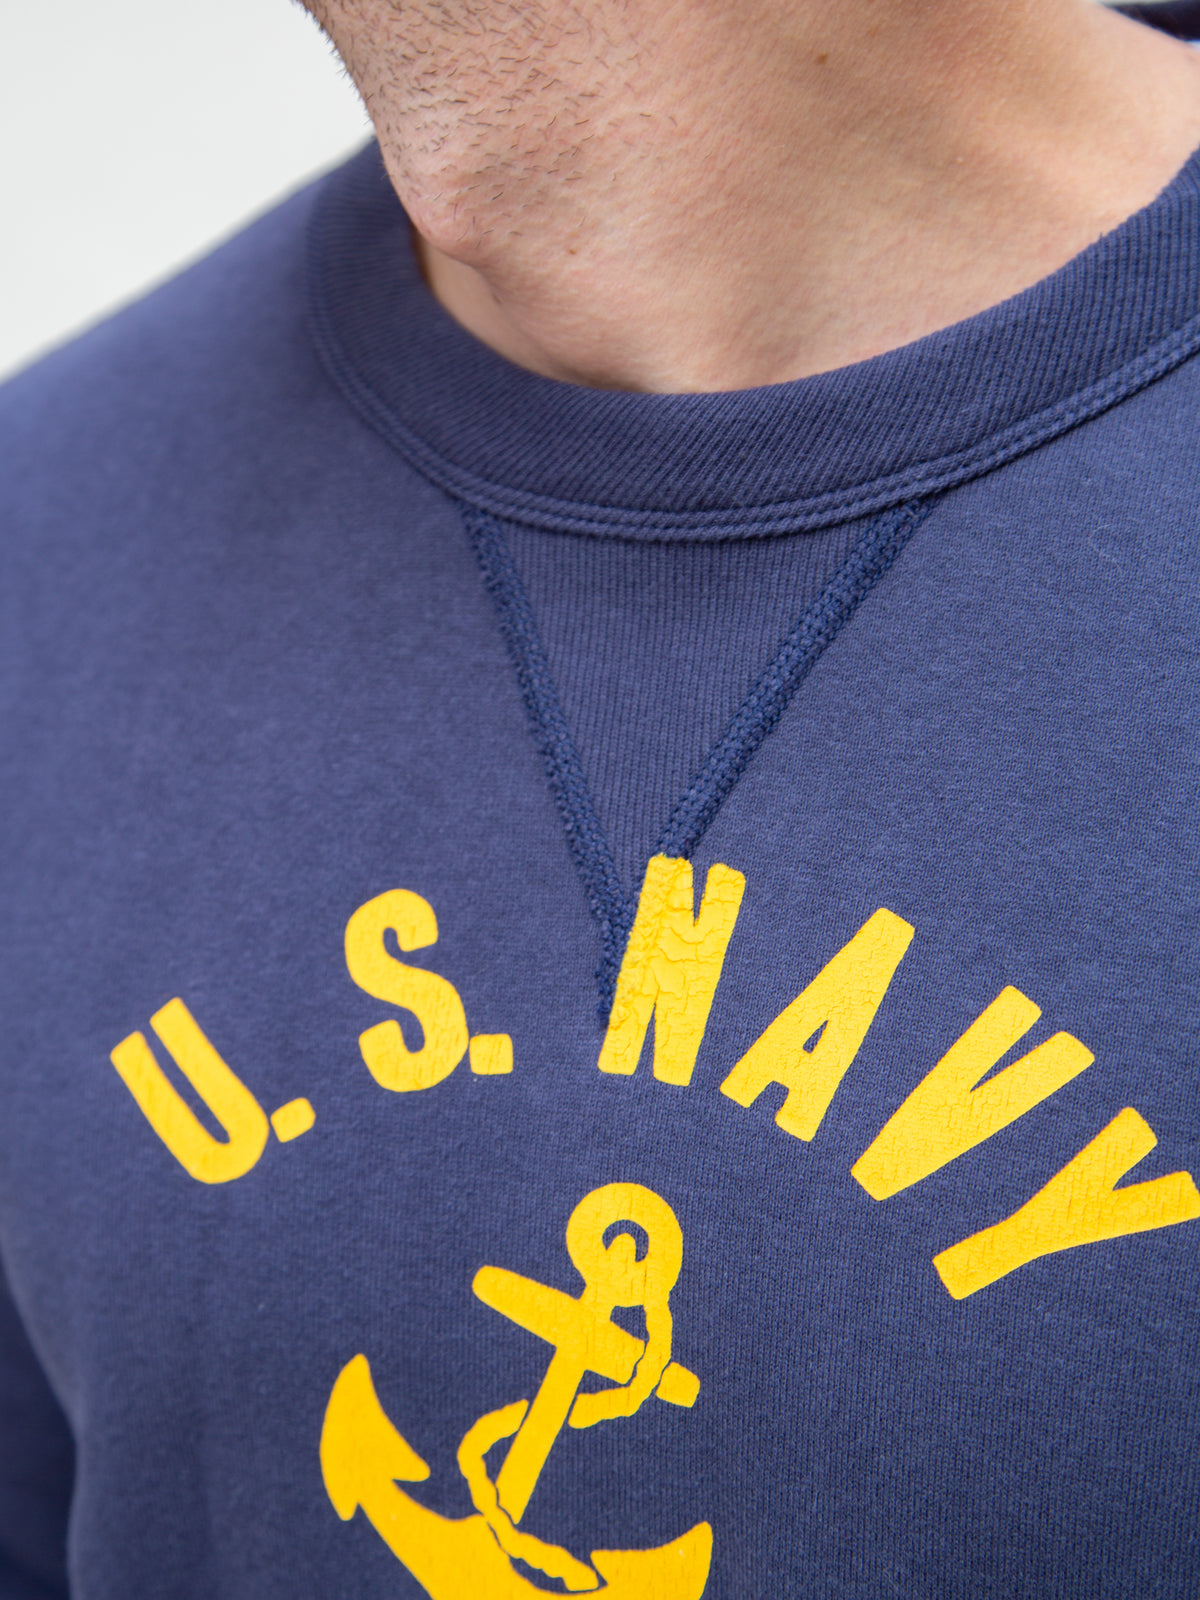 The Real McCoy's MC19108 Military Print Sweatshirt / US NAVY Anchor